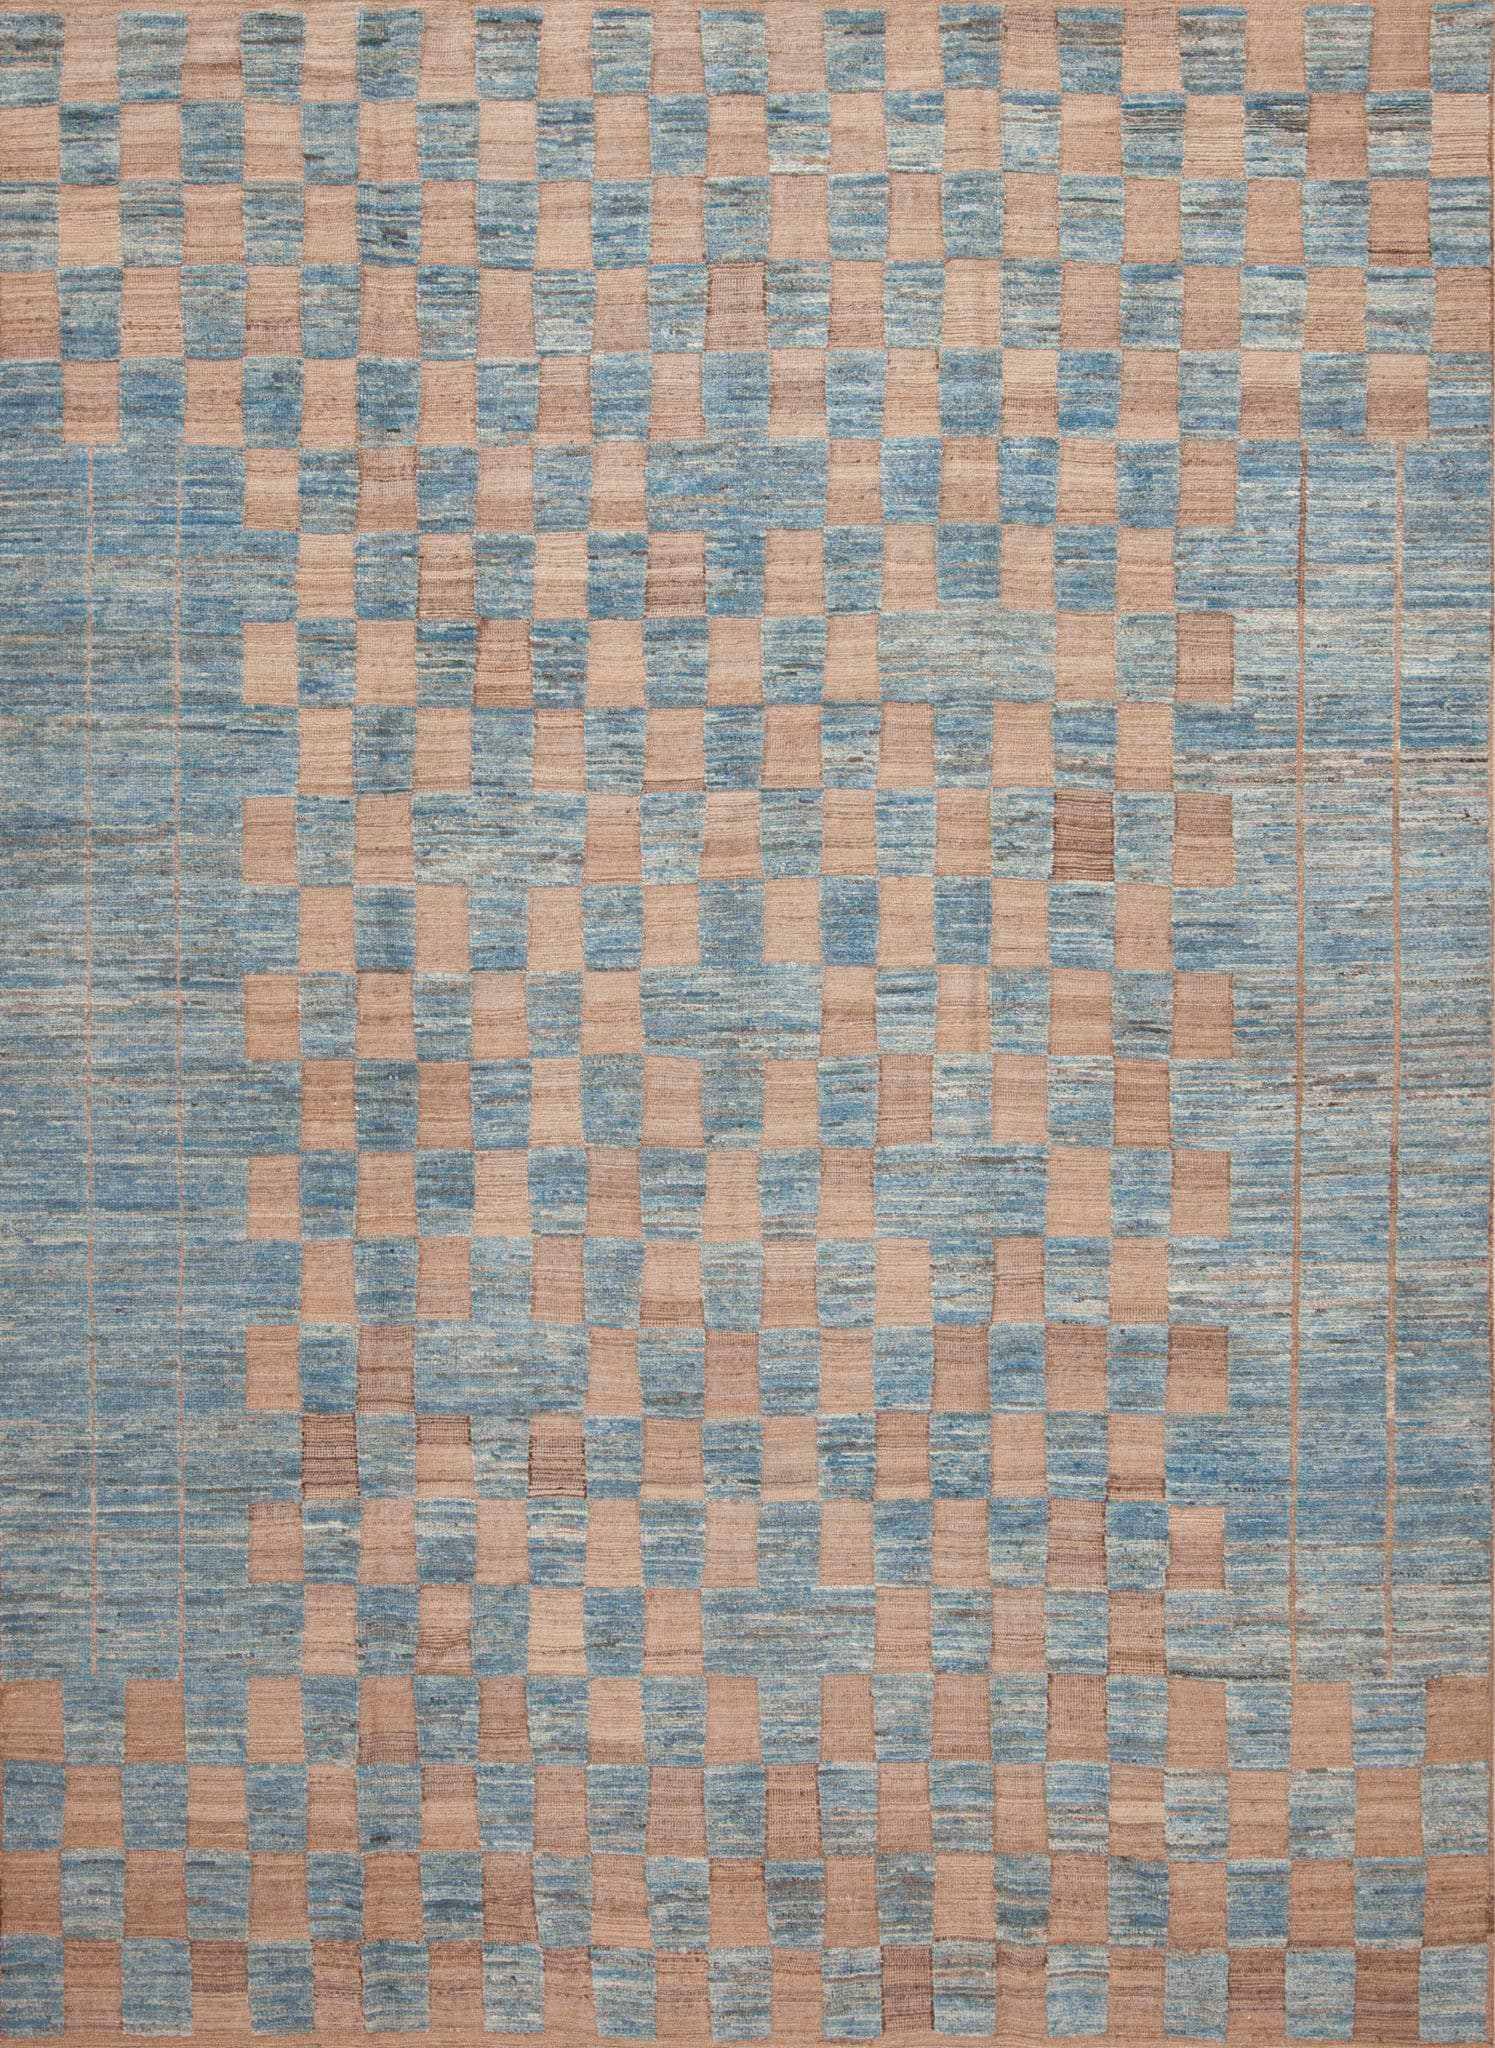 Collection Nazmiyal, tapis tribal géométrique moderne, taille de pièce 8'4" x 11'